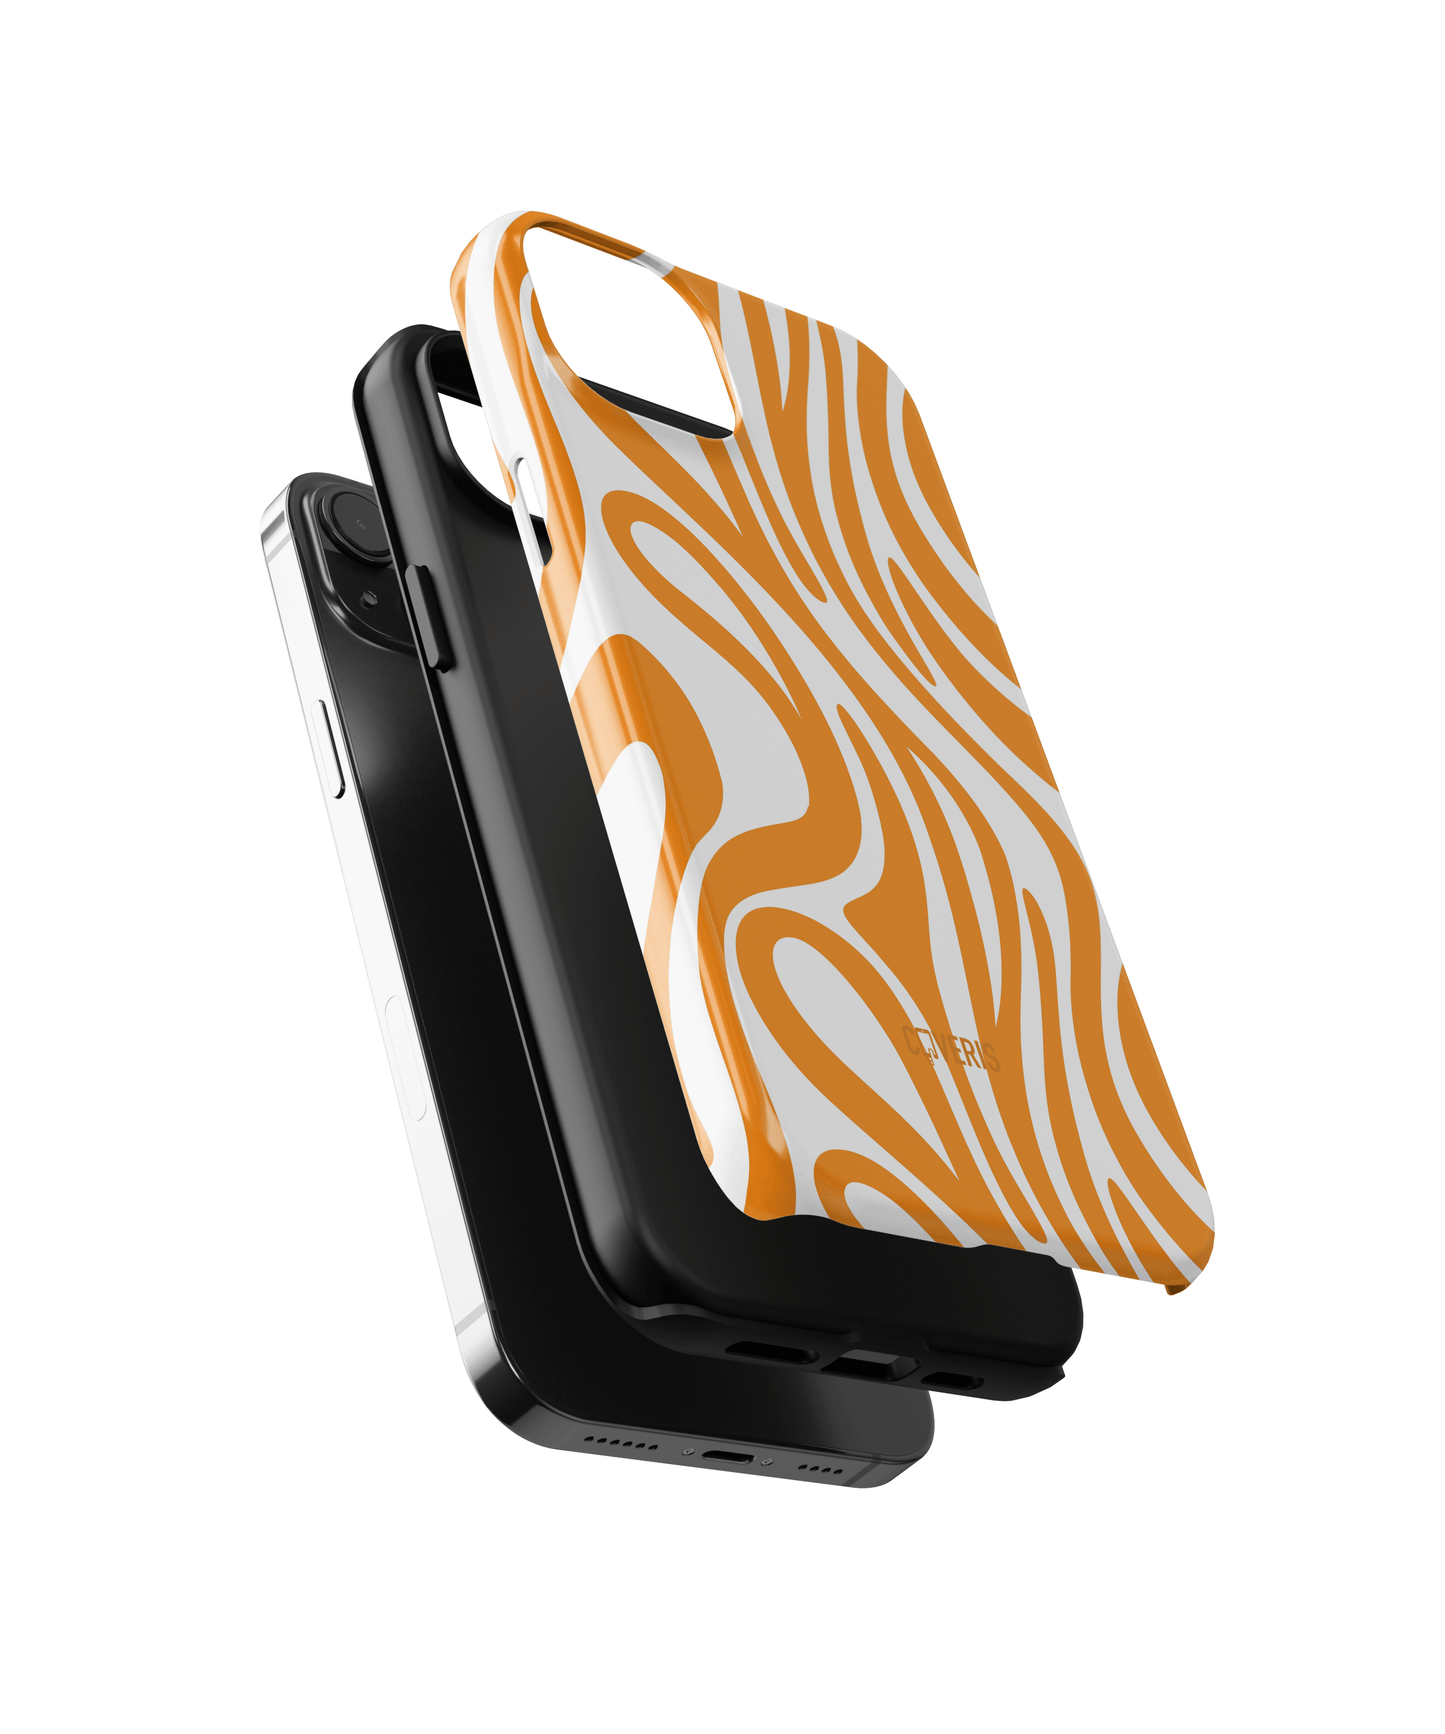 Orangewaves - Google Pixel 4 XL phone case